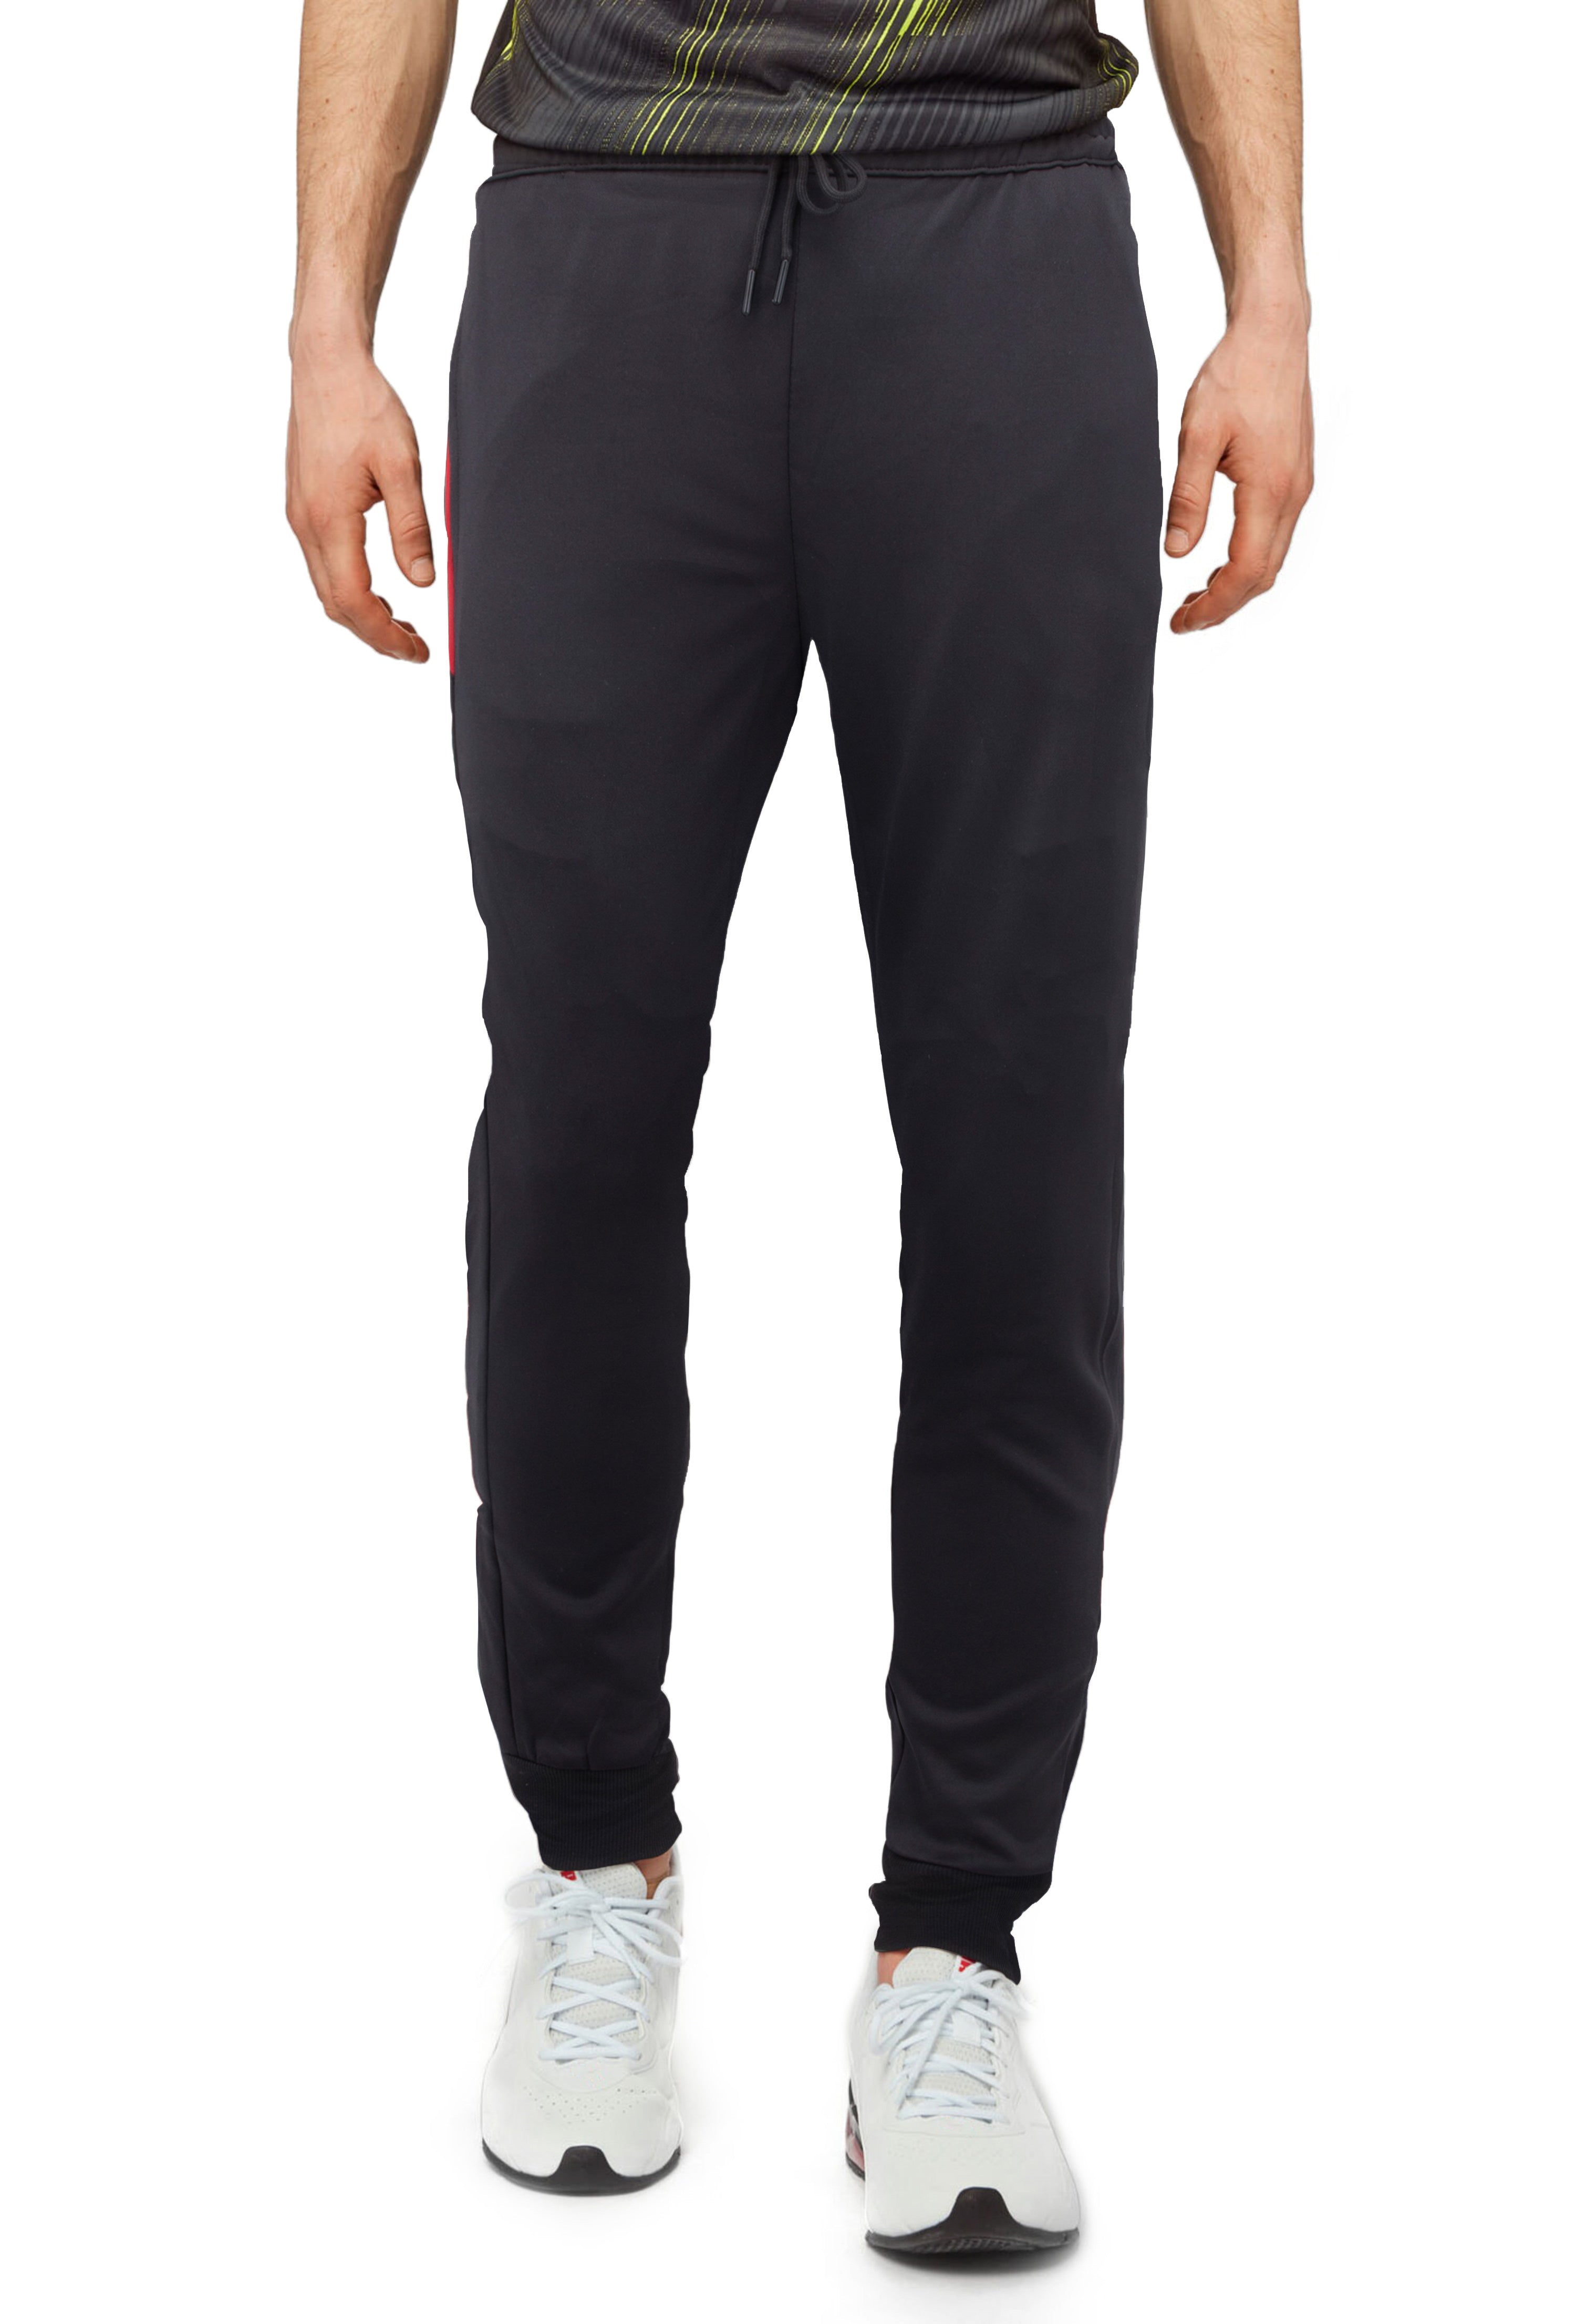 XRay Jeans Cultura Men's Jogger Sweatpants – X-RAY JEANS